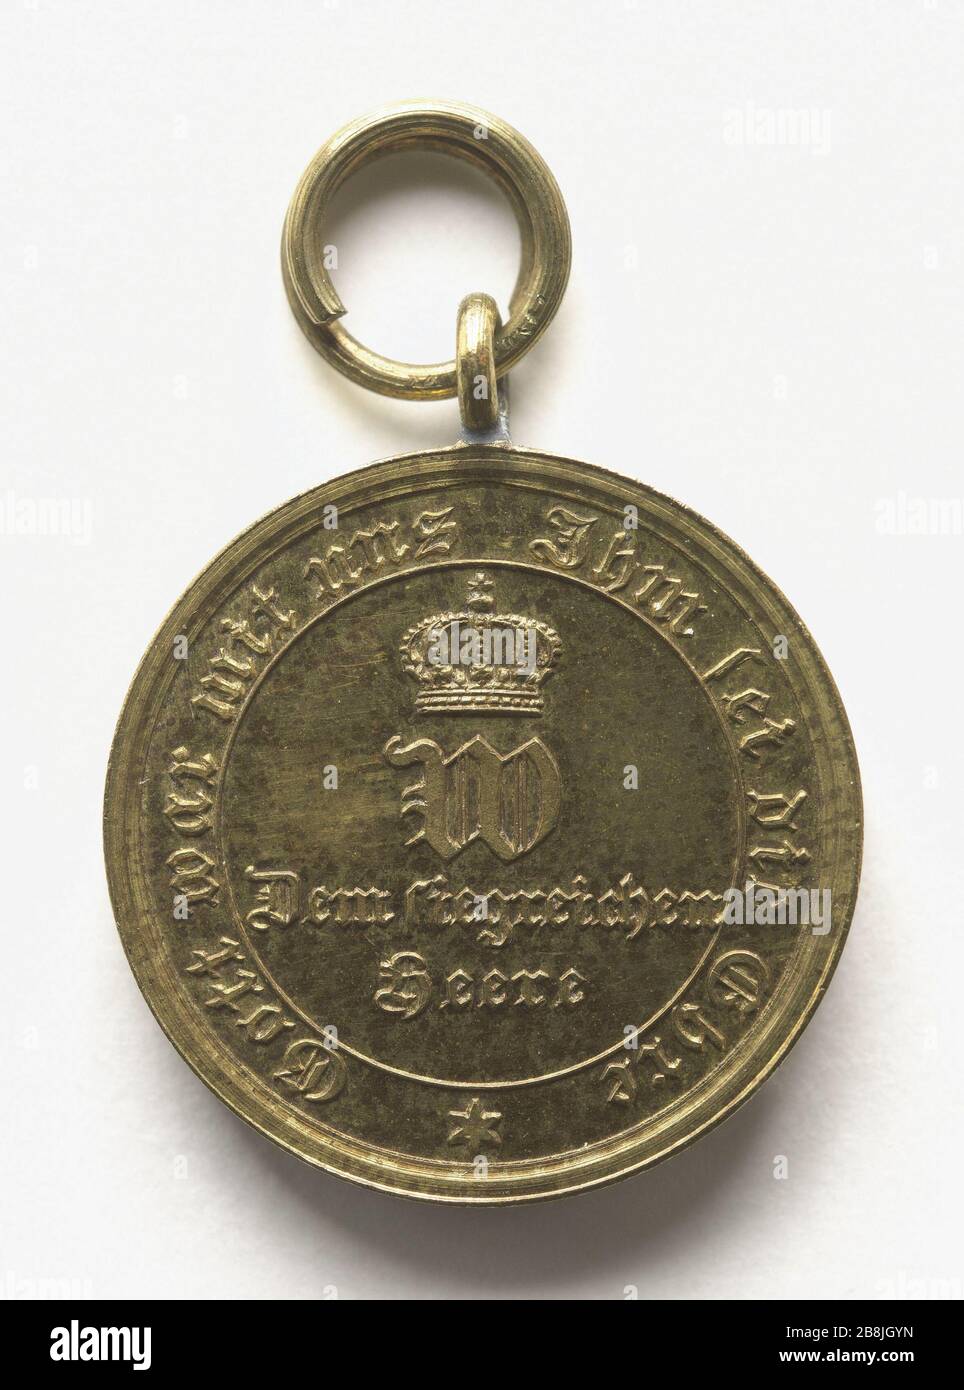 Deutsche Medaille: "Die siegreiche Armee", 1870-1871 (Dummy-Titel) Médaille allemande : "l'armée victorieuse". Cuivre doré, 1871. Paris, musée Carnavalet. Stockfoto